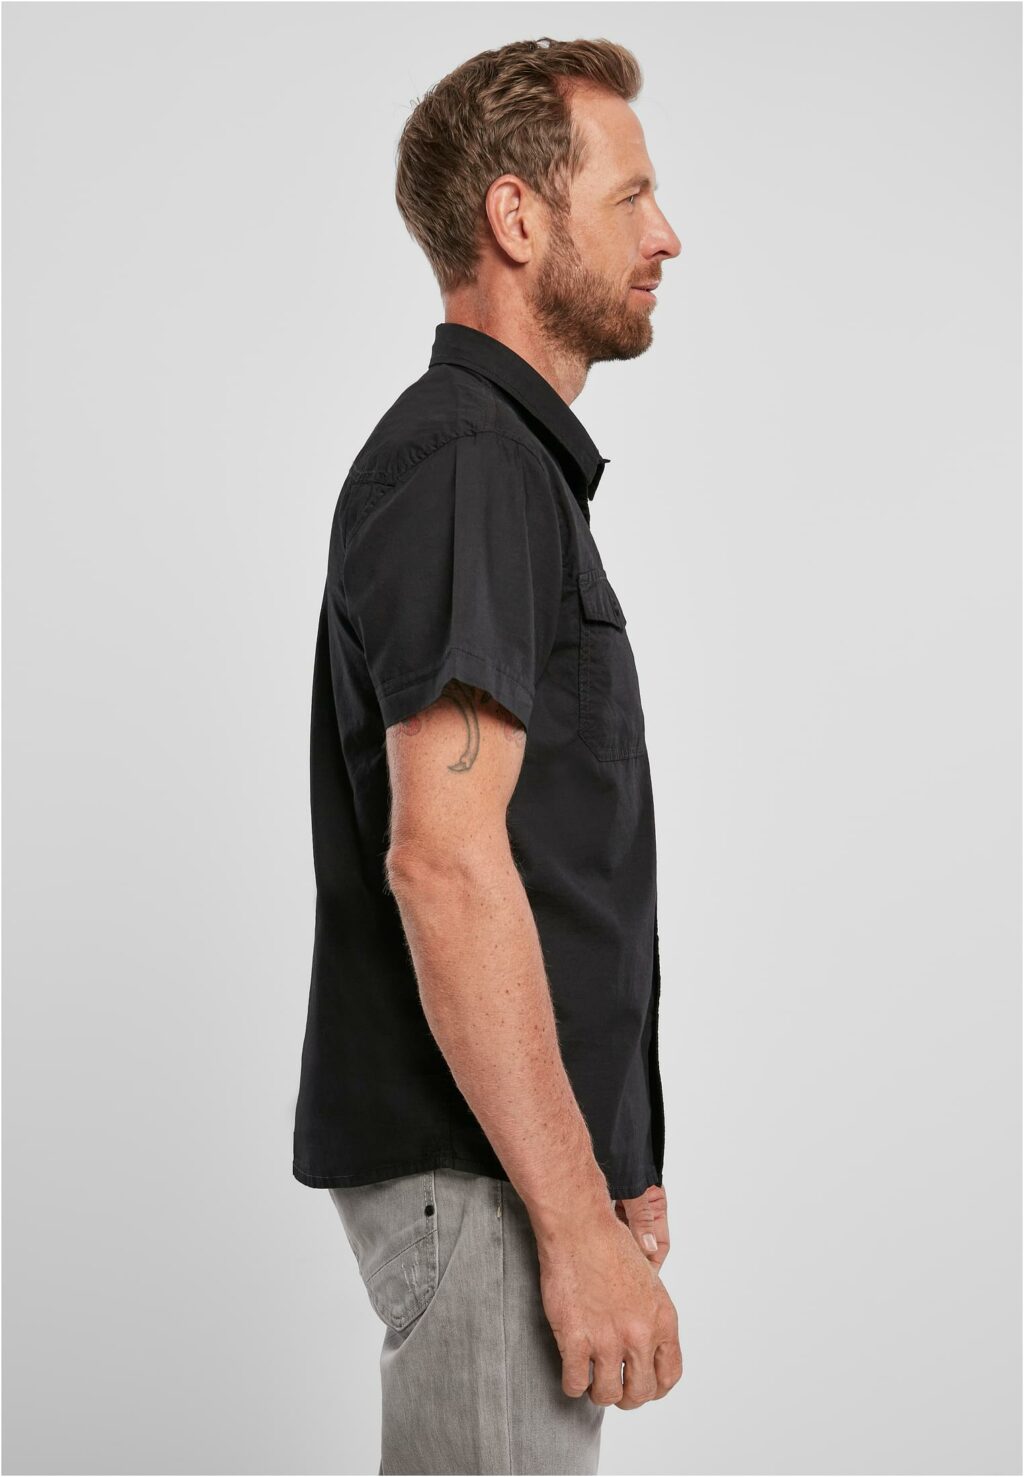 Brandit Roadstar Shirt black BD4012